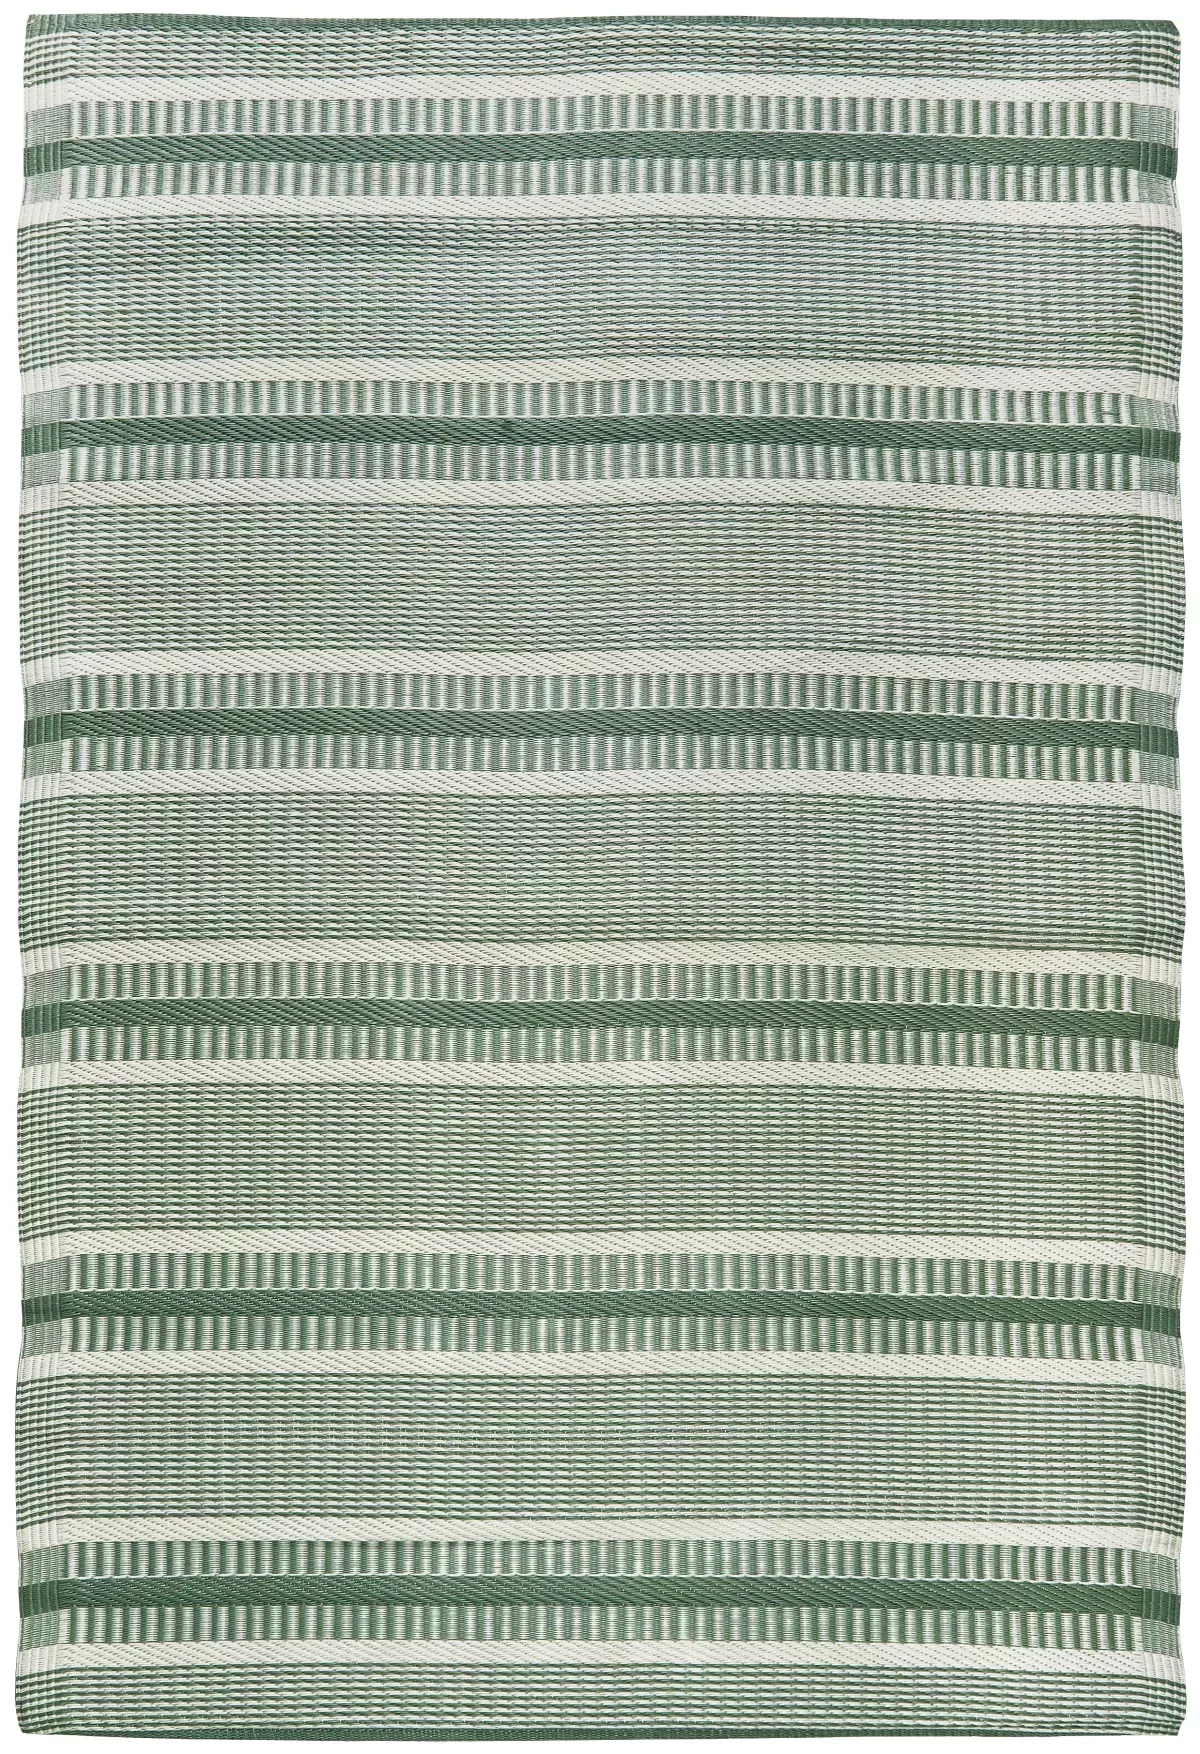 #3 - Ib Laursen gulvtæppe stribet grøn i recycled plastik 120 x 180 cm